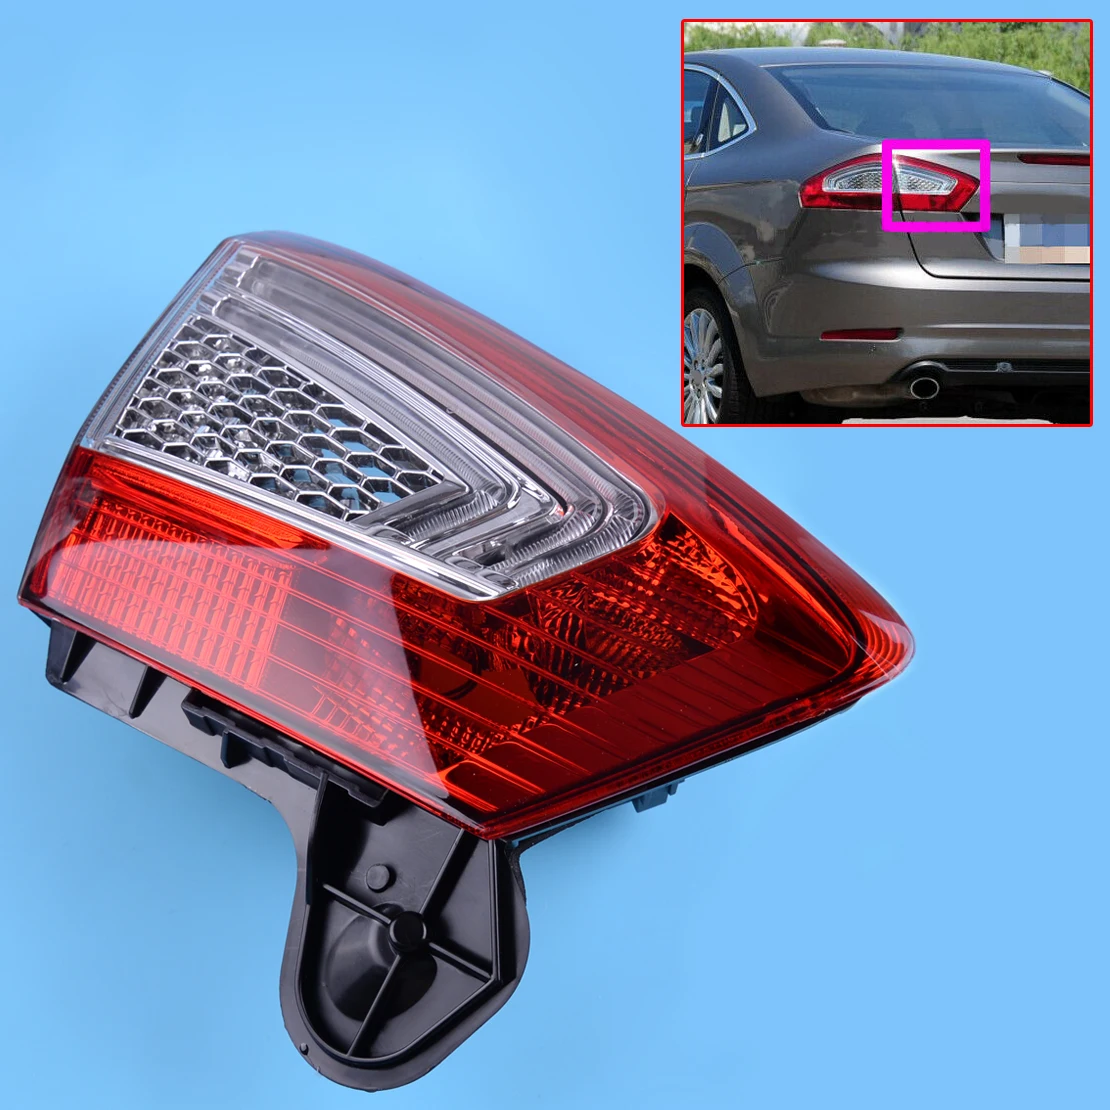 

DWCX Авто левый ВНУТРЕННИЙ Задний задний светильник, лампа подходит для Ford Mondeo хэтчбек 2011 2012 2013 2014 2015